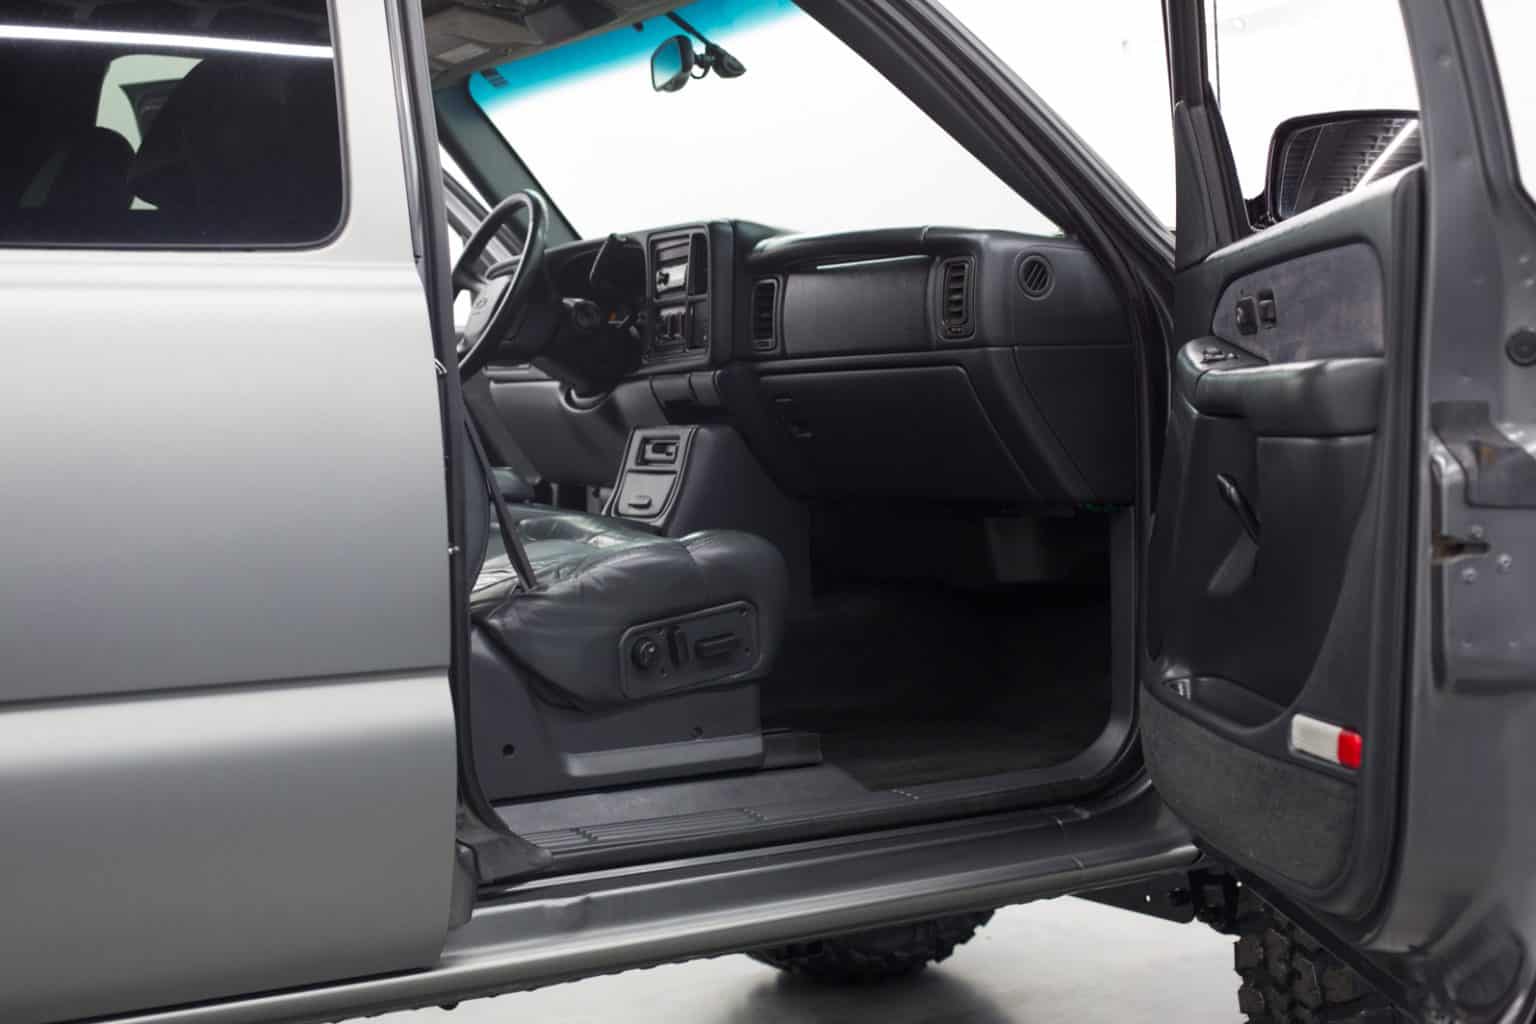 2002 Chevy Silverado Lift Kit